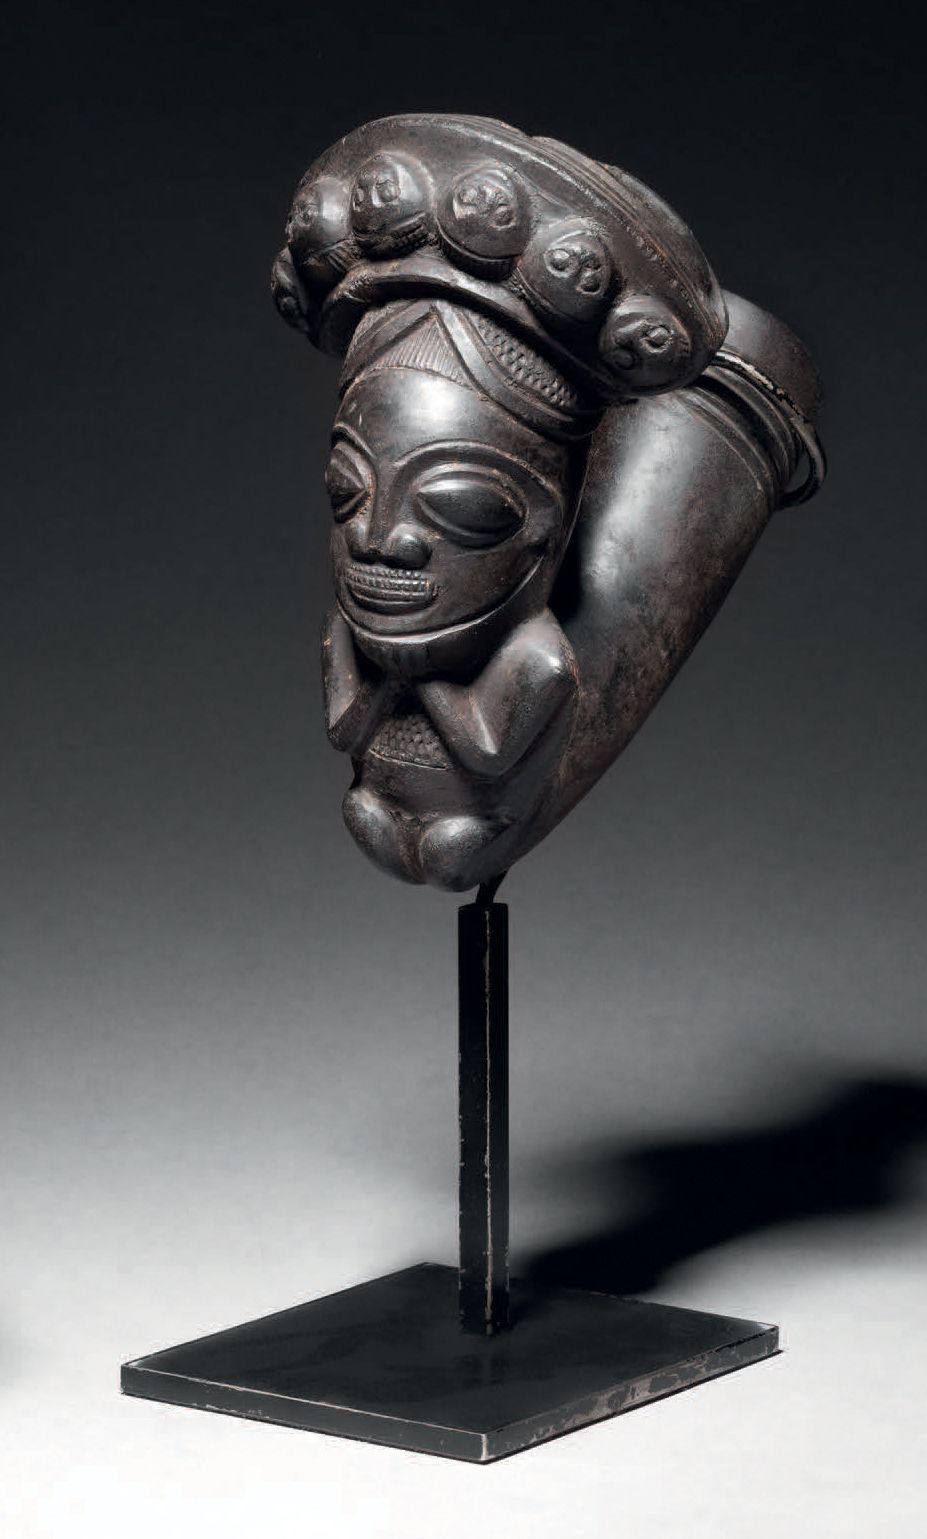 Null 烟斗，喀麦隆
陶器，黑色滑块
高14厘米
烟斗，喀麦隆
高5.5英寸
这个烟斗碗描绘了一个有身份的人的半身像，这种高耸的头饰是为知名人士准备的。